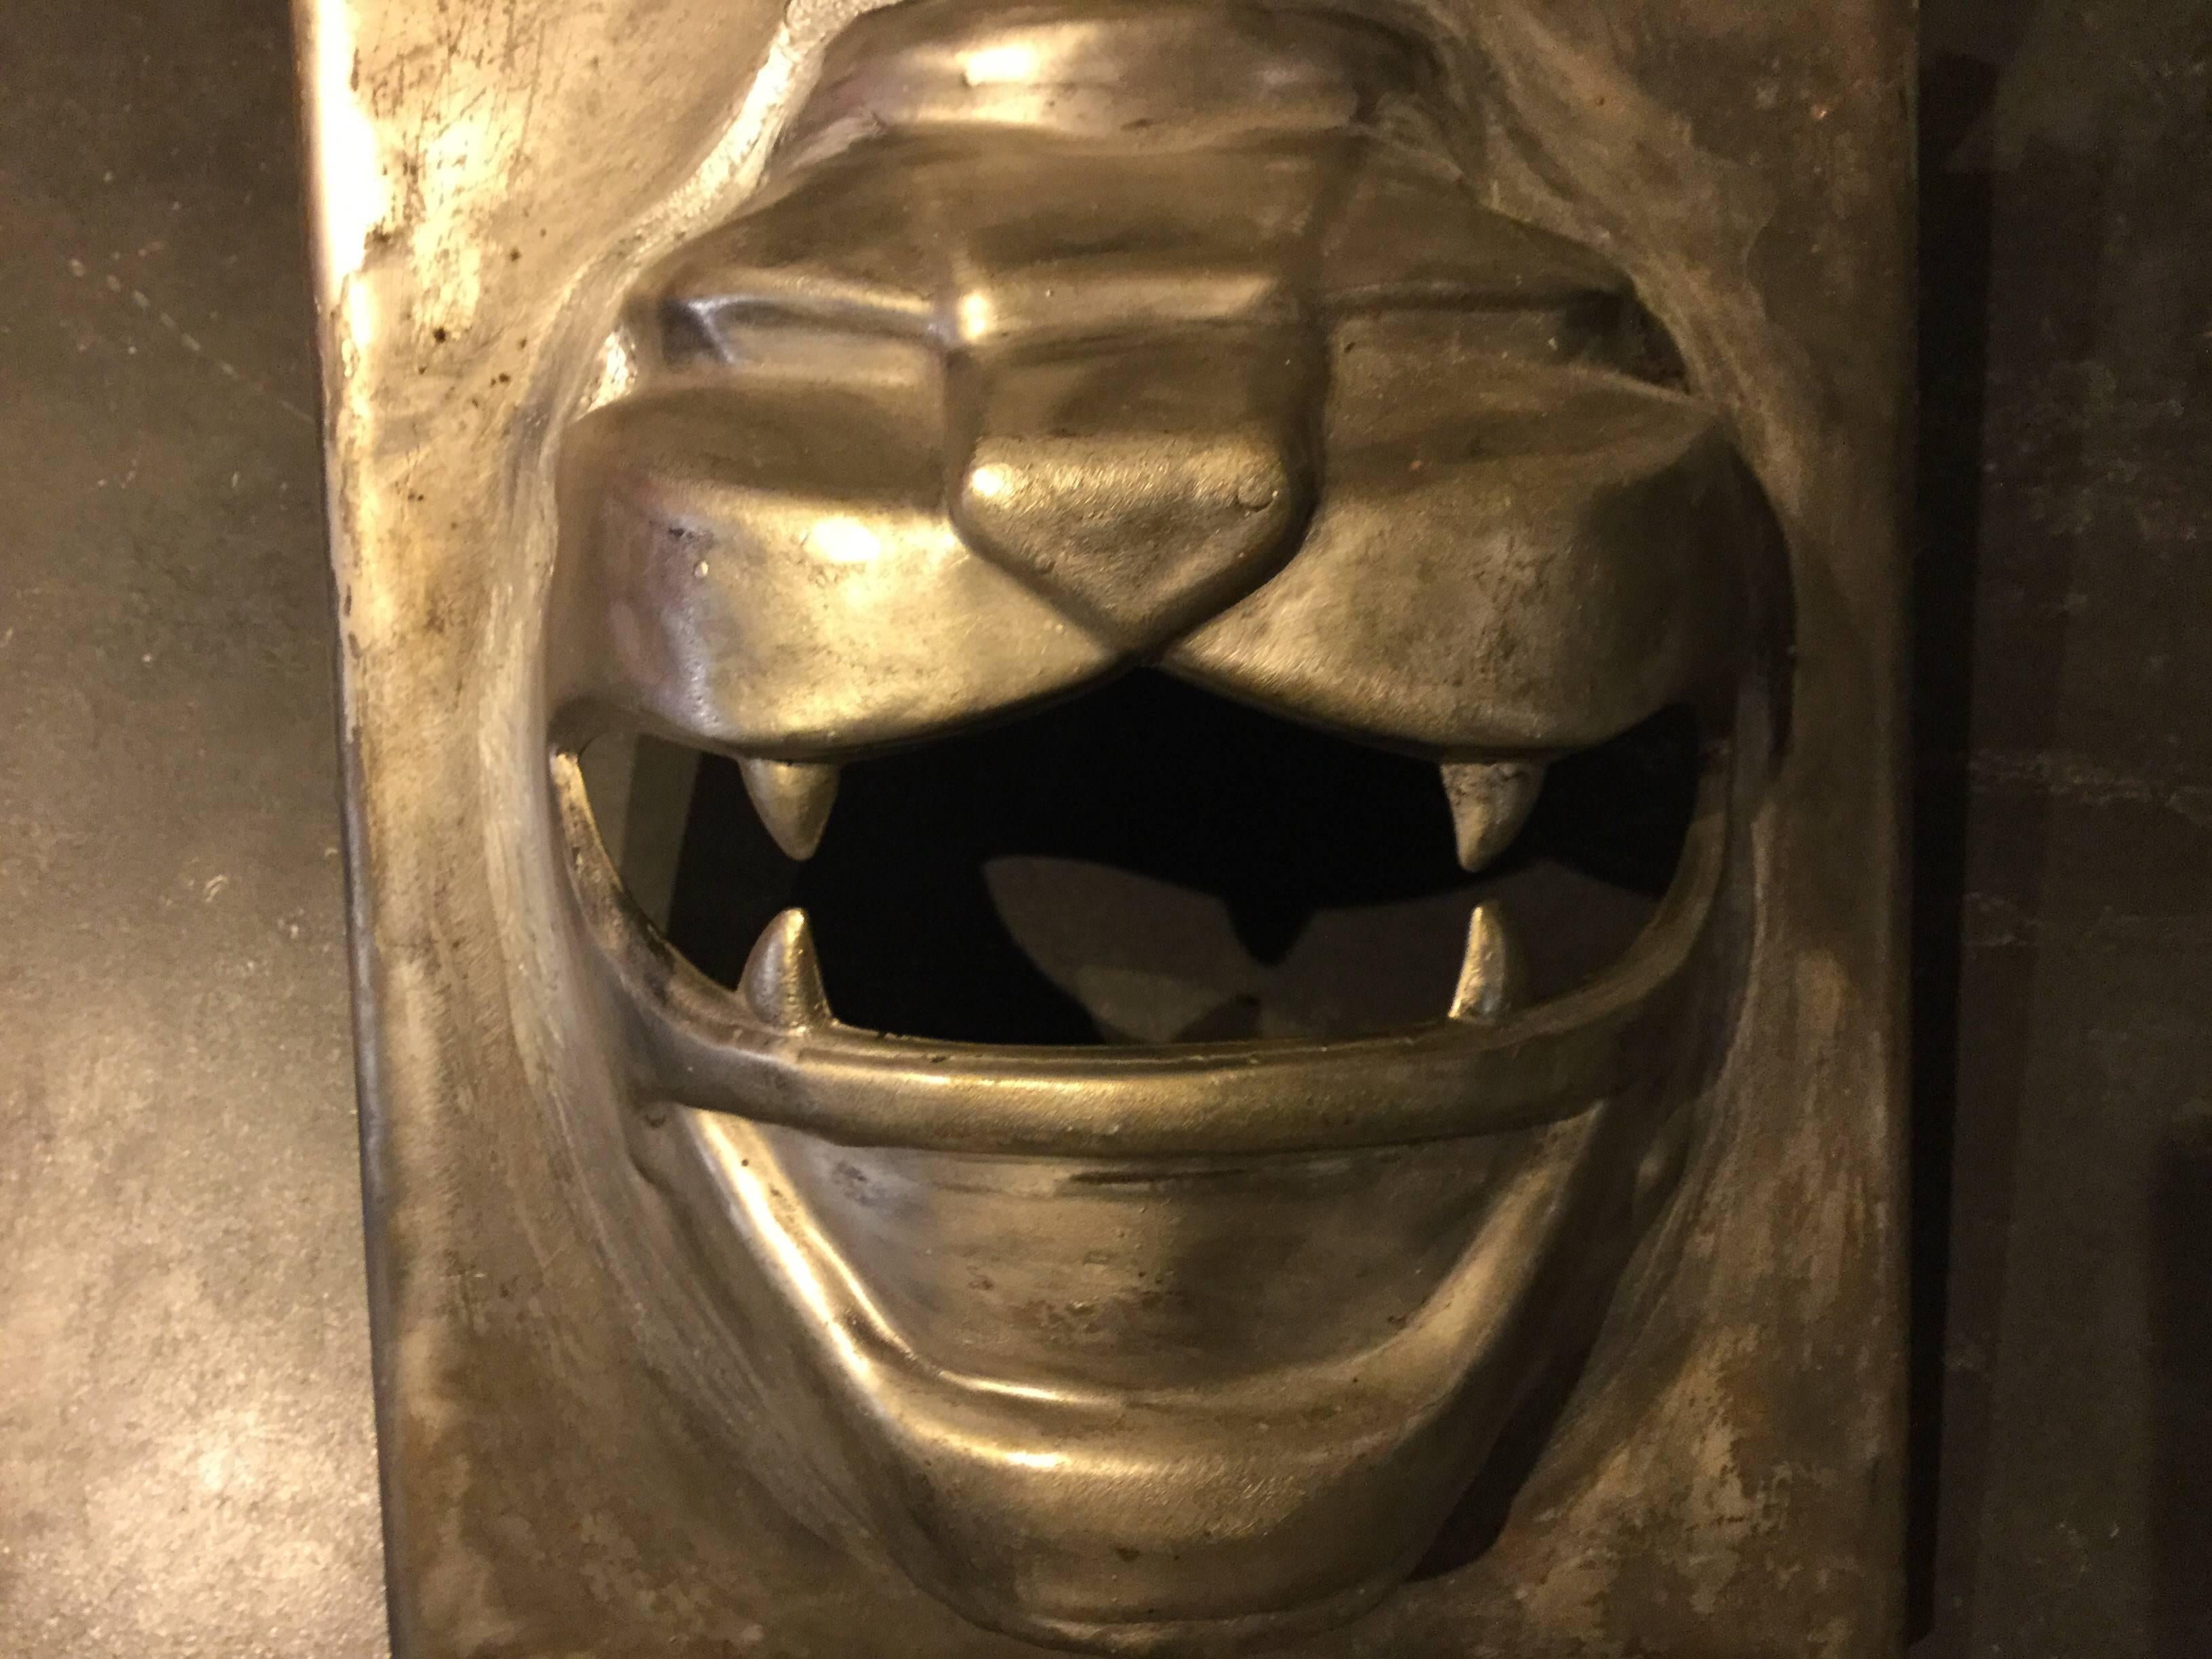 Steel Industrial mold lion mask.